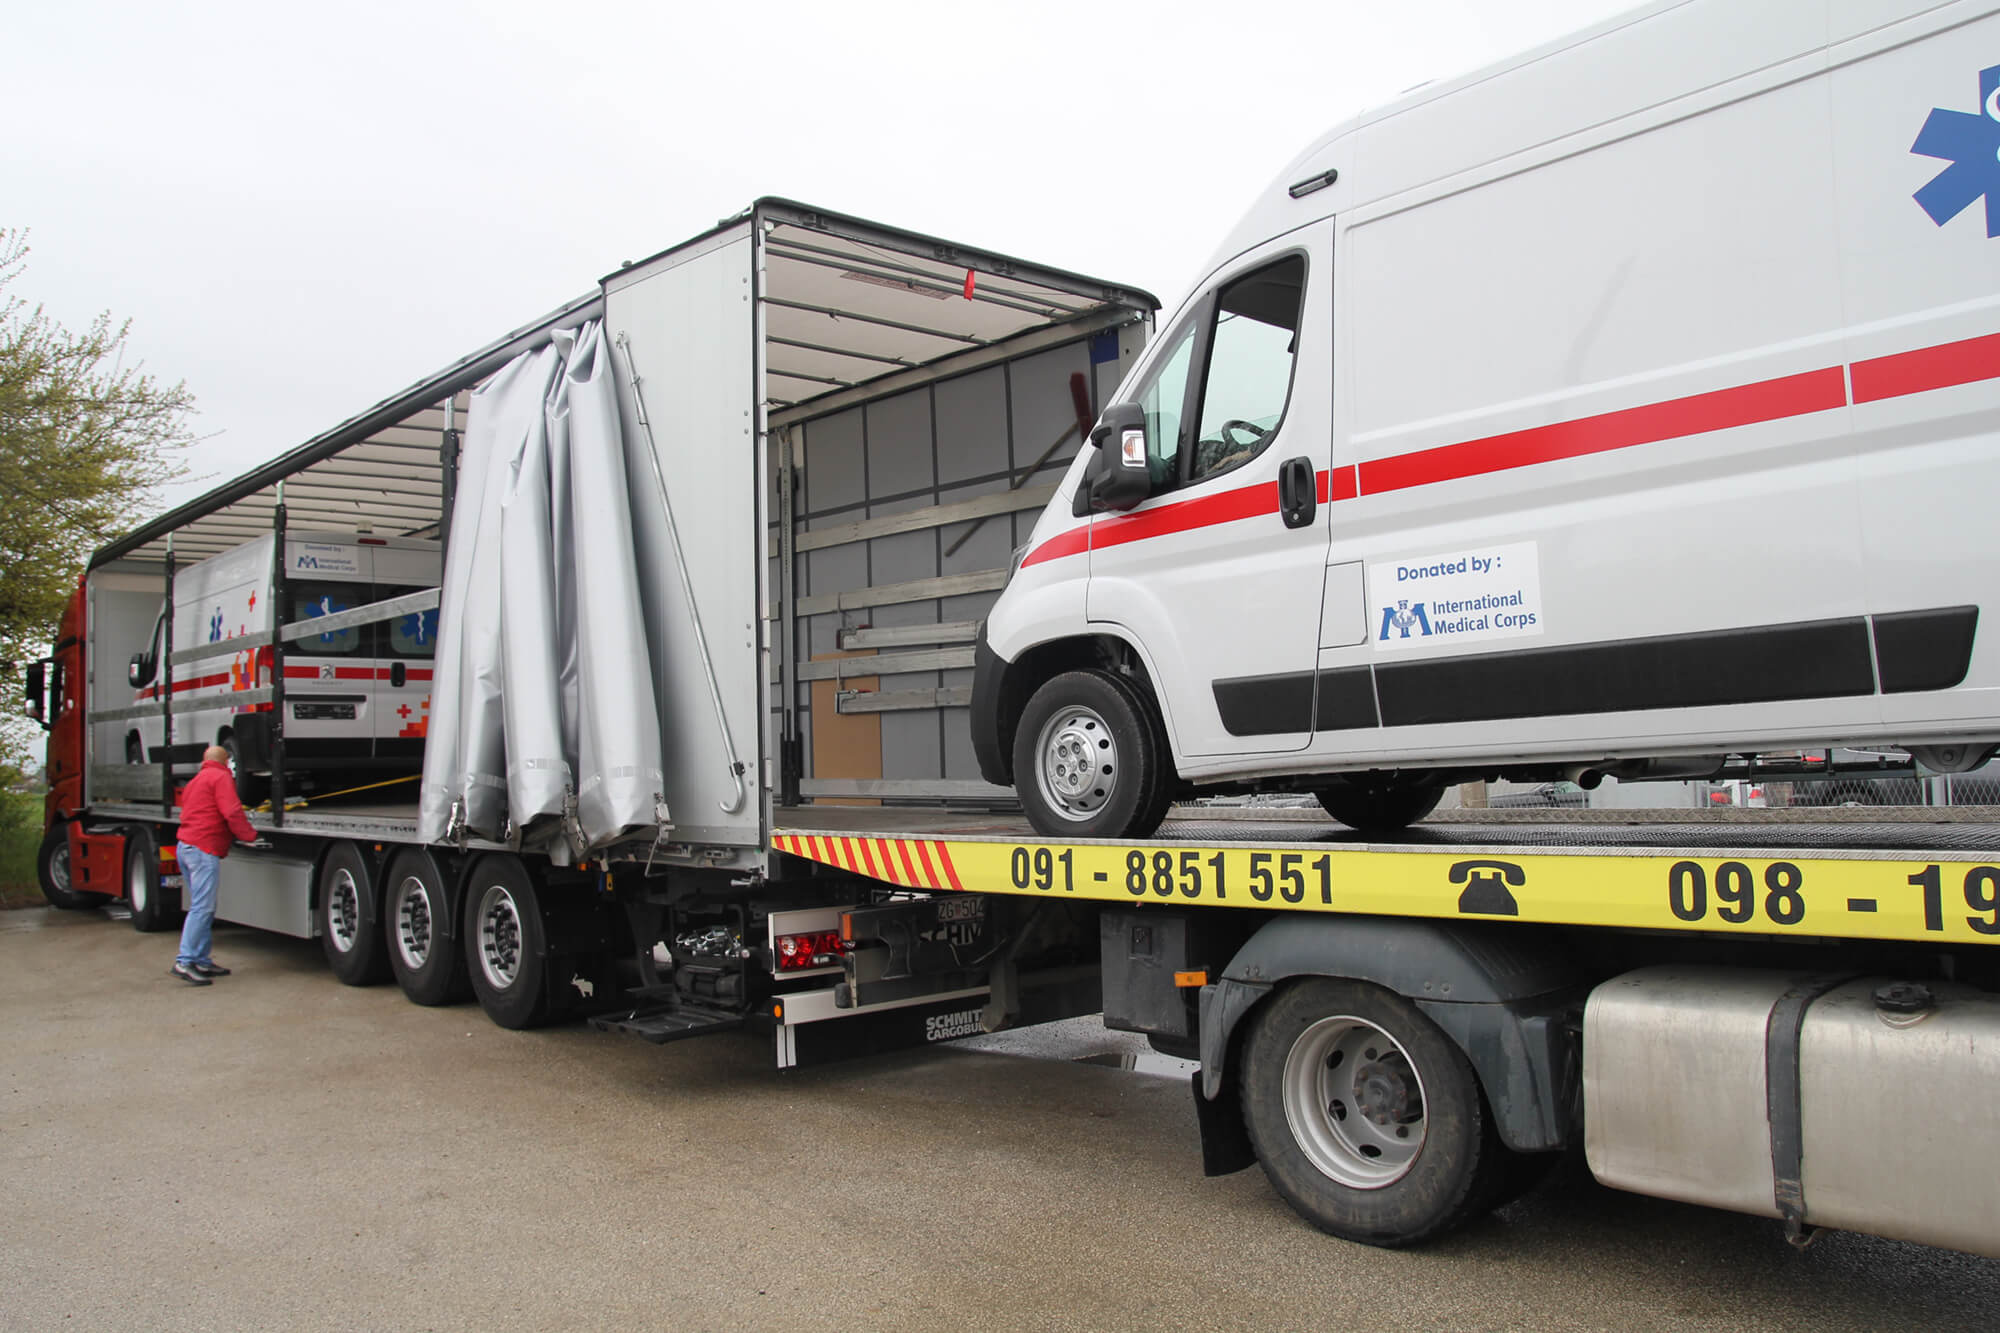 Ambulances from International Medical Corps arrive in Lviv, Ukraine.